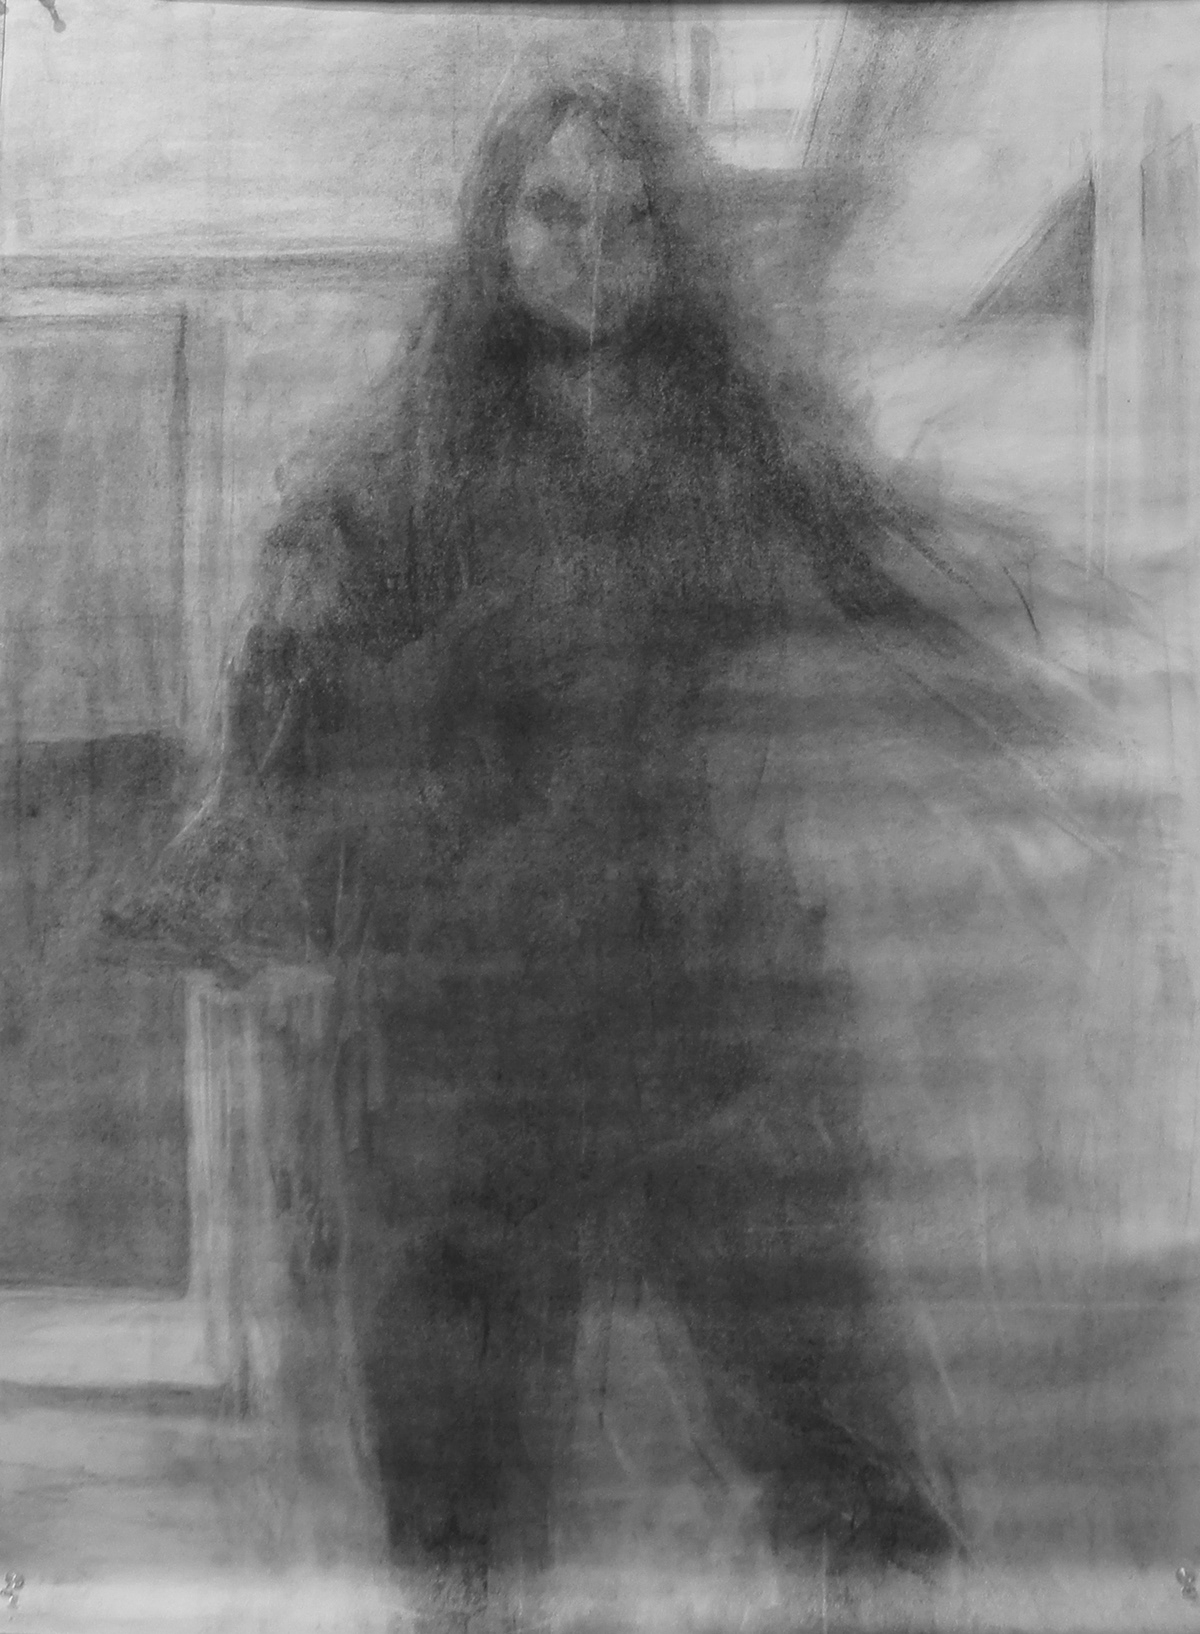 Foundation Year charcoal self portrait